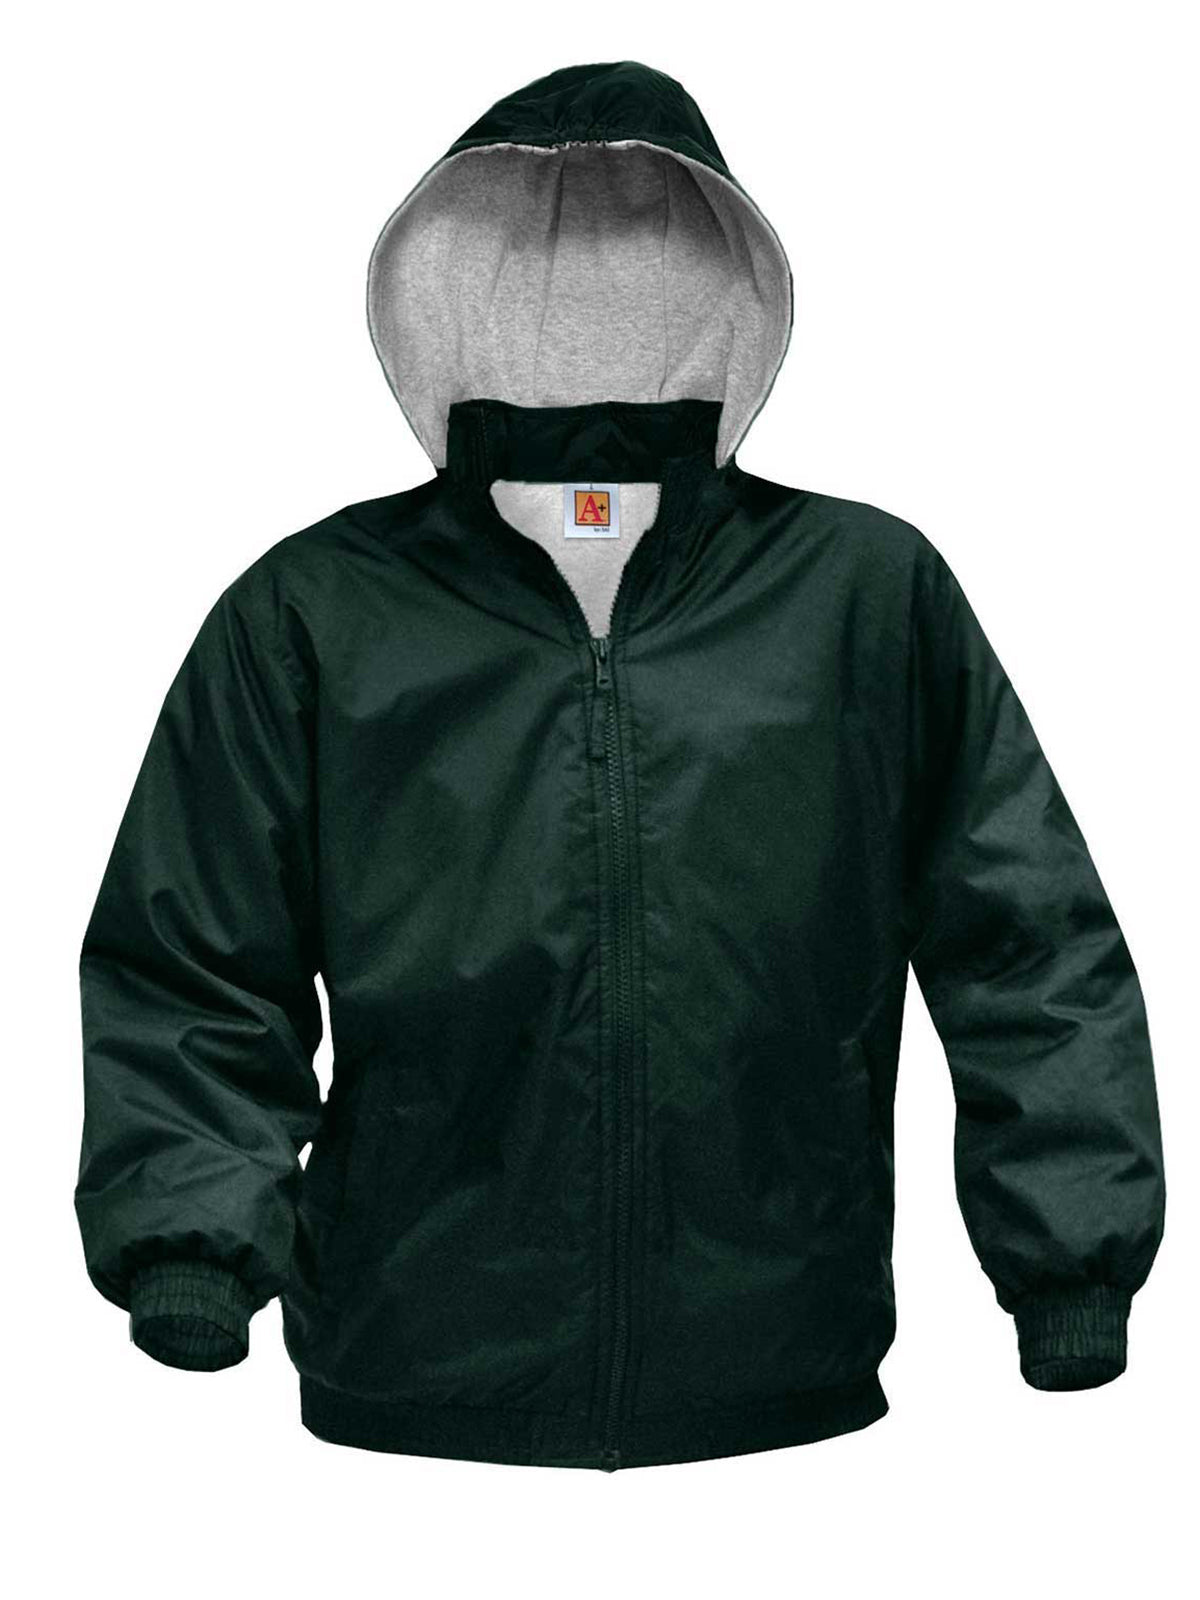 Unisex Nylon Outerwear Jacket - 6225 - Green